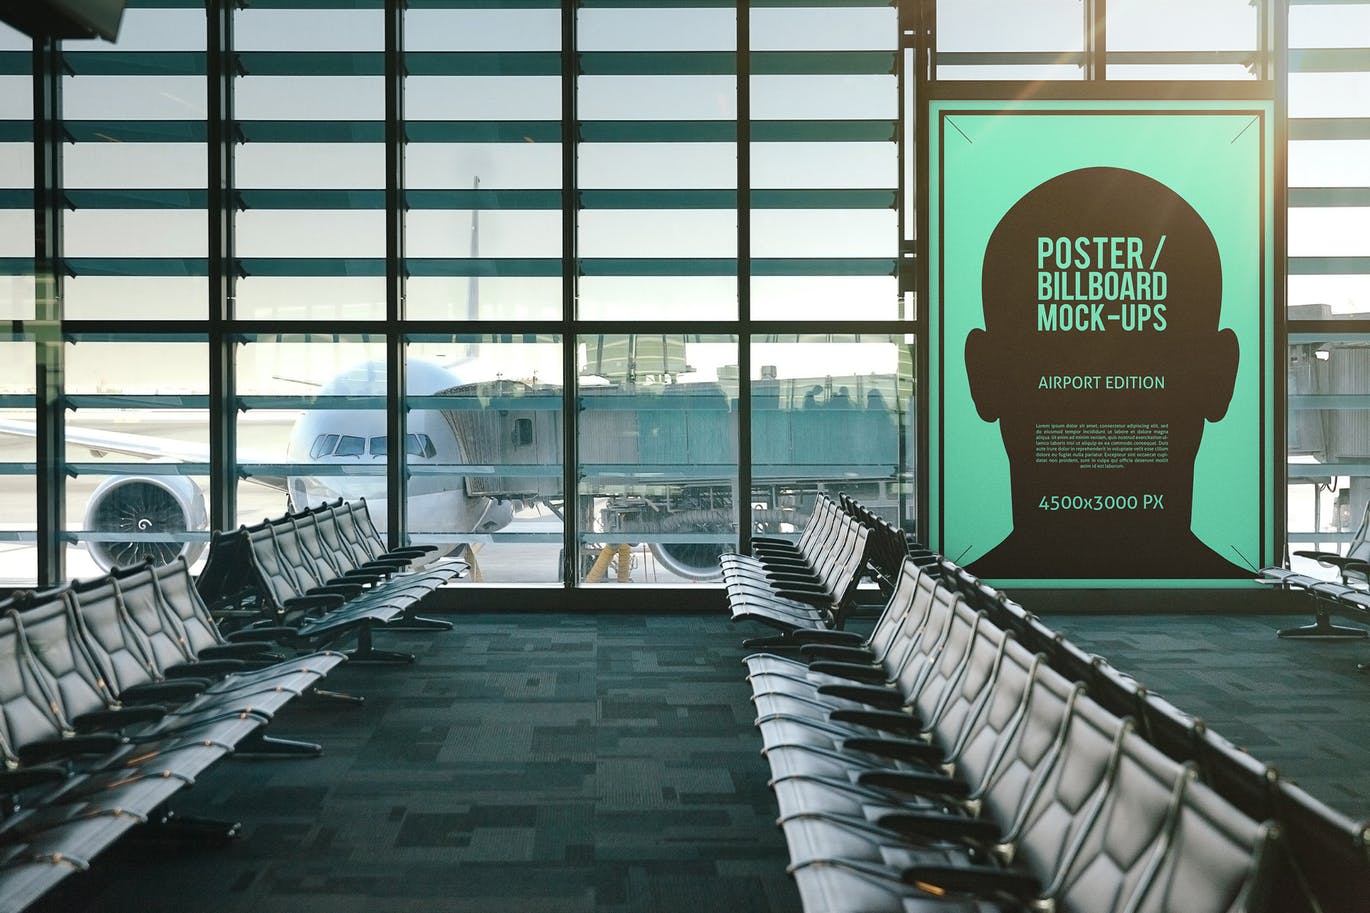 机场候机室海报/广告牌样机非凡图库精选模板#1 Poster / Billboard Mock-ups – Airport Edition #1插图